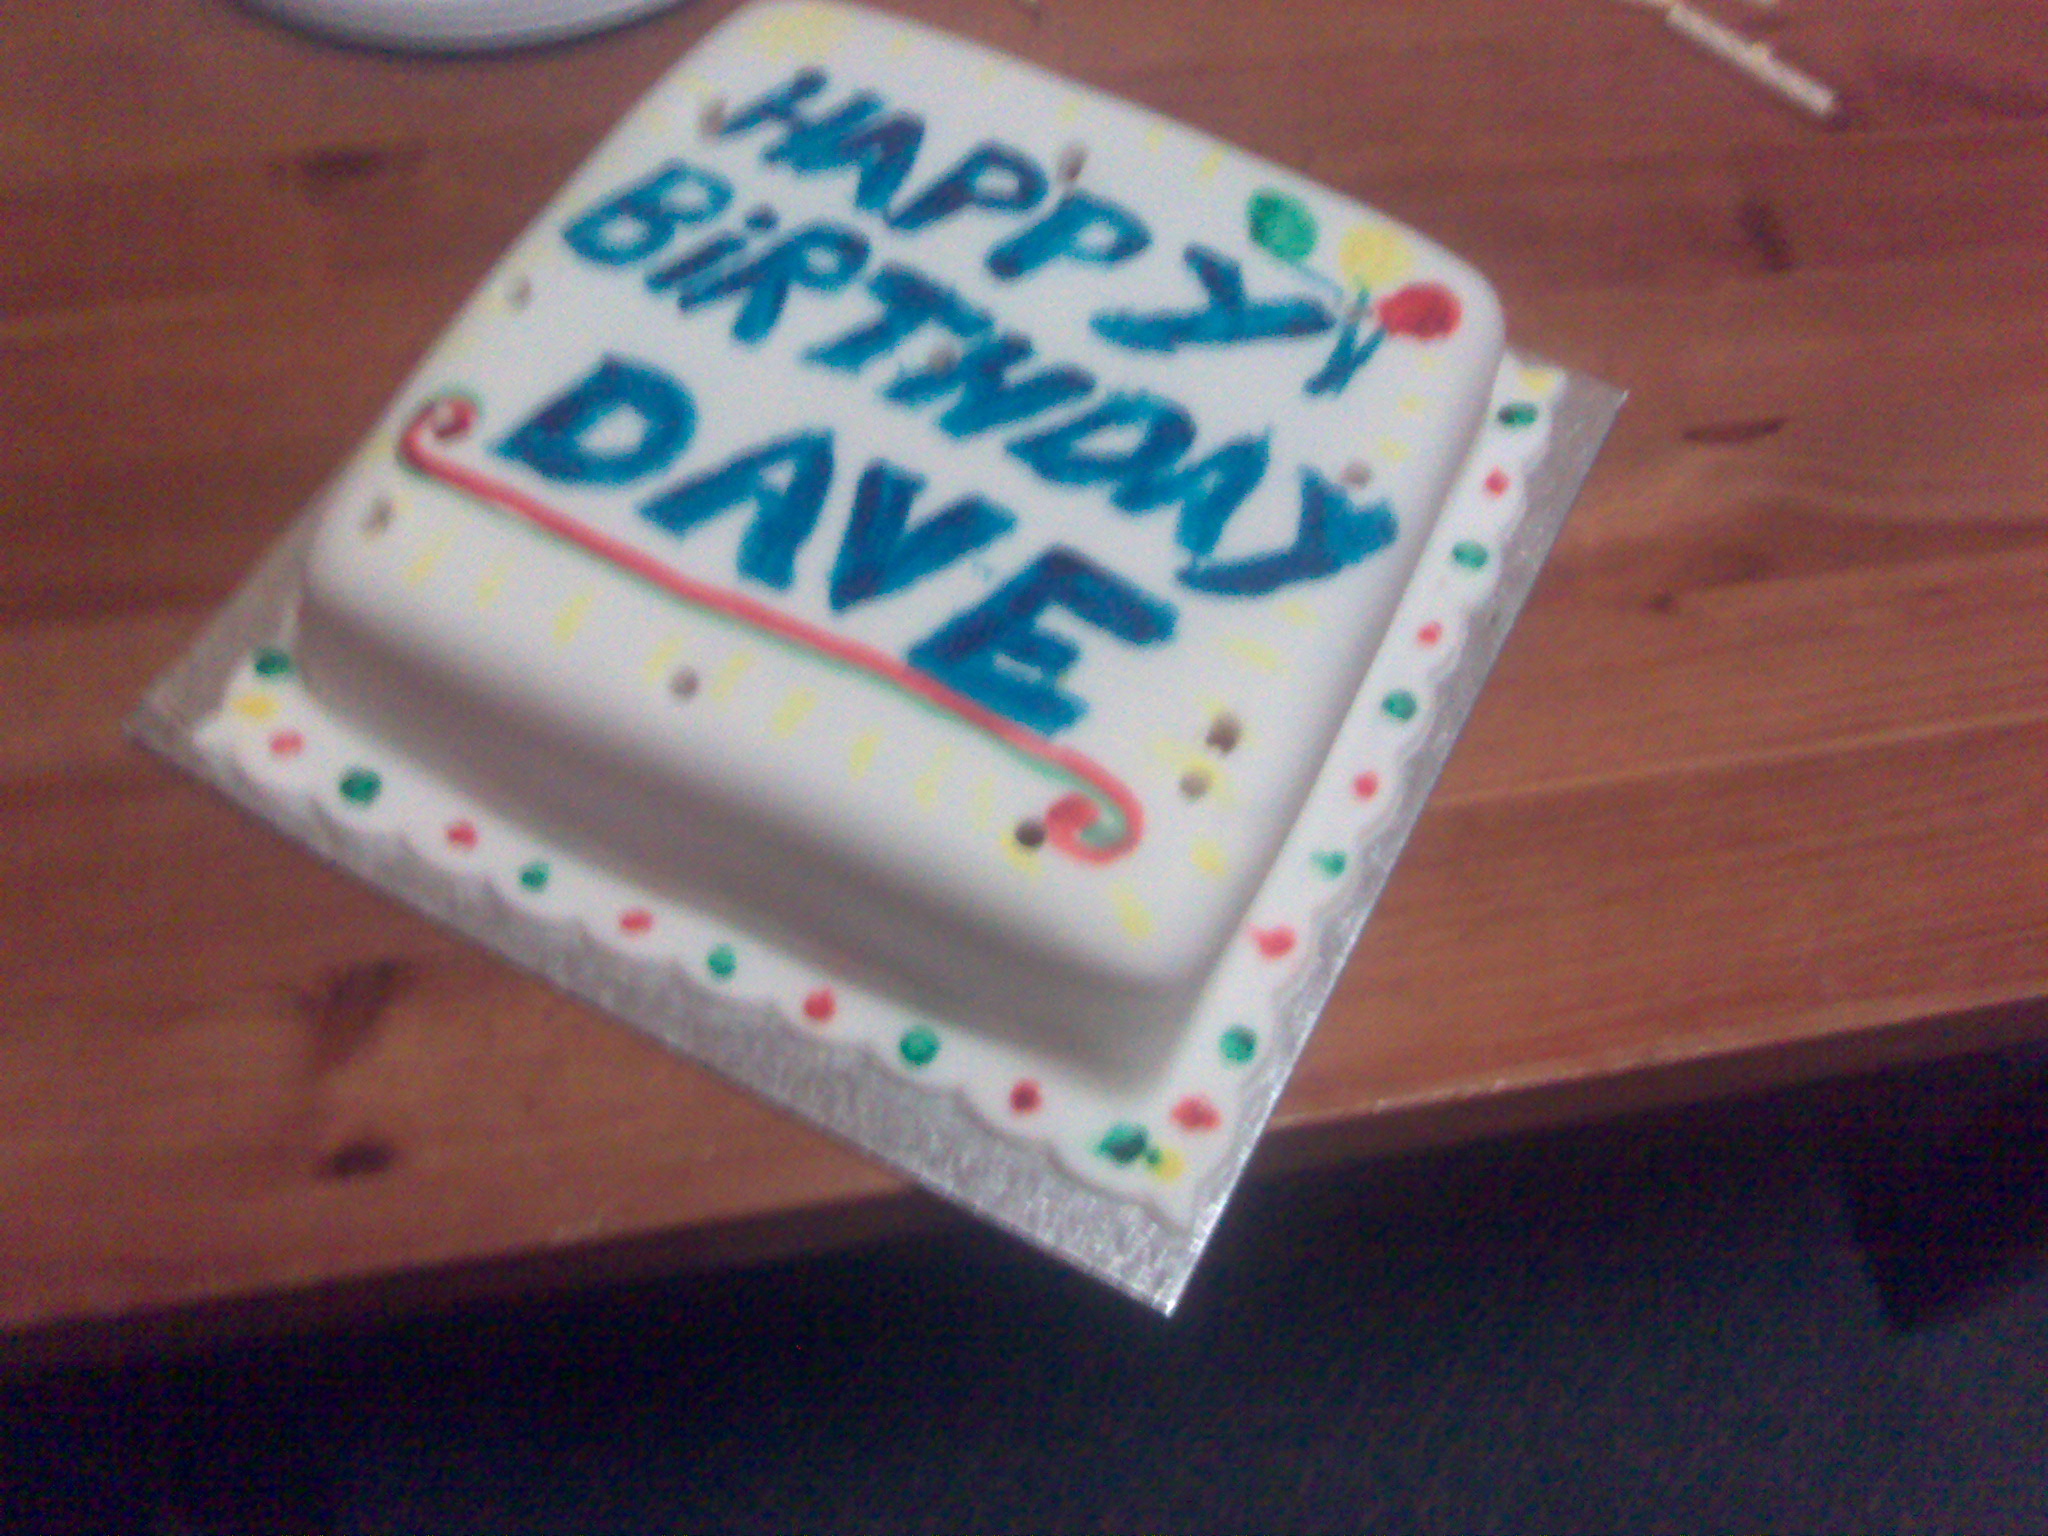 Daves Birthday cake!